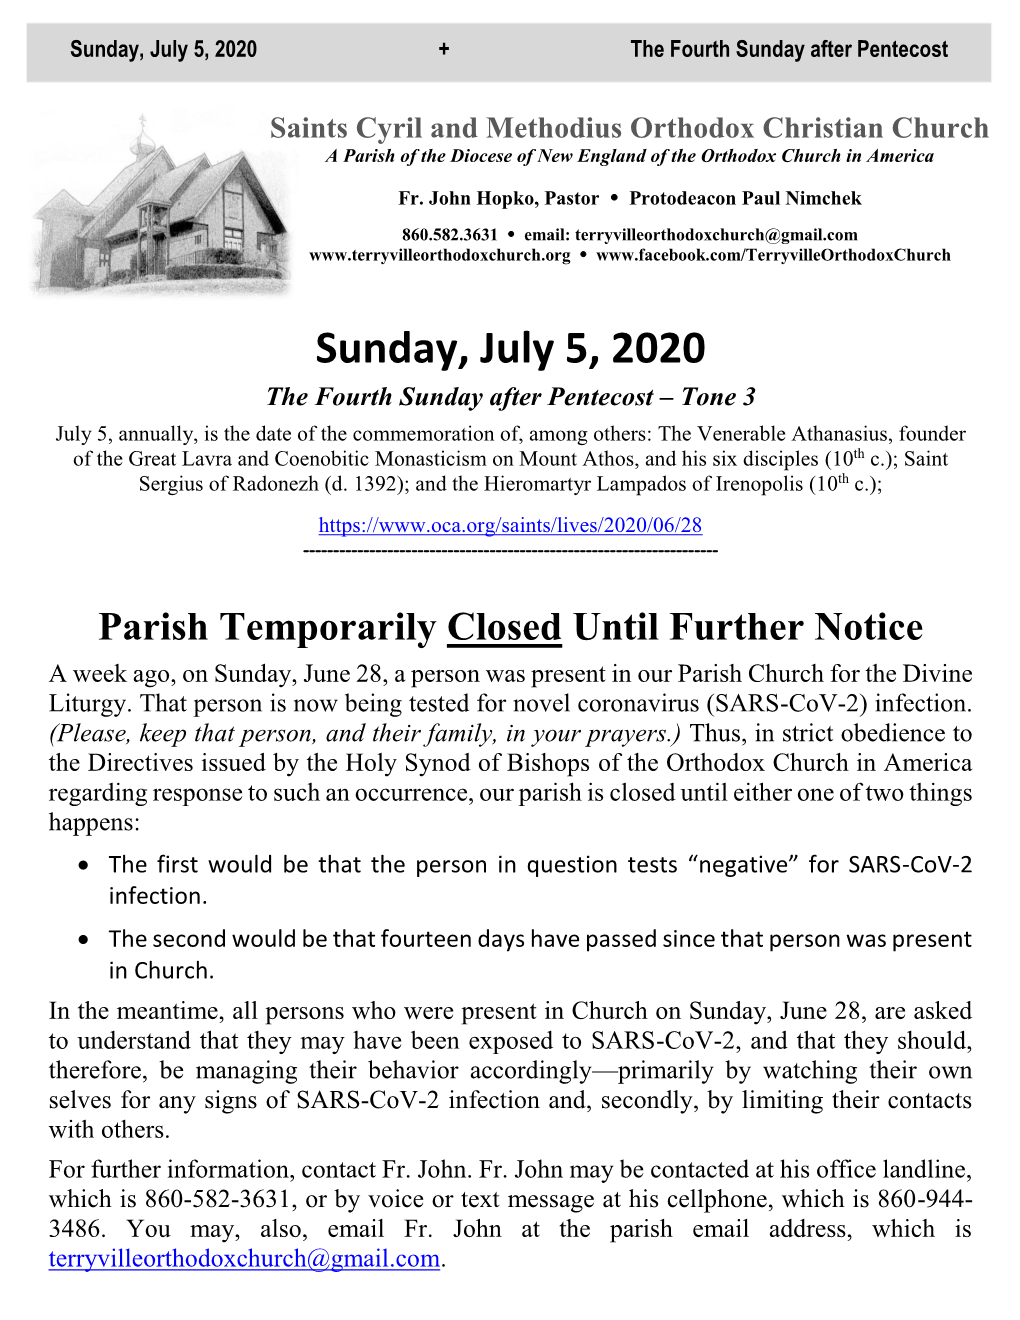 Sunday, July 5, 2020 + the Fourth Sunday After Pentecost